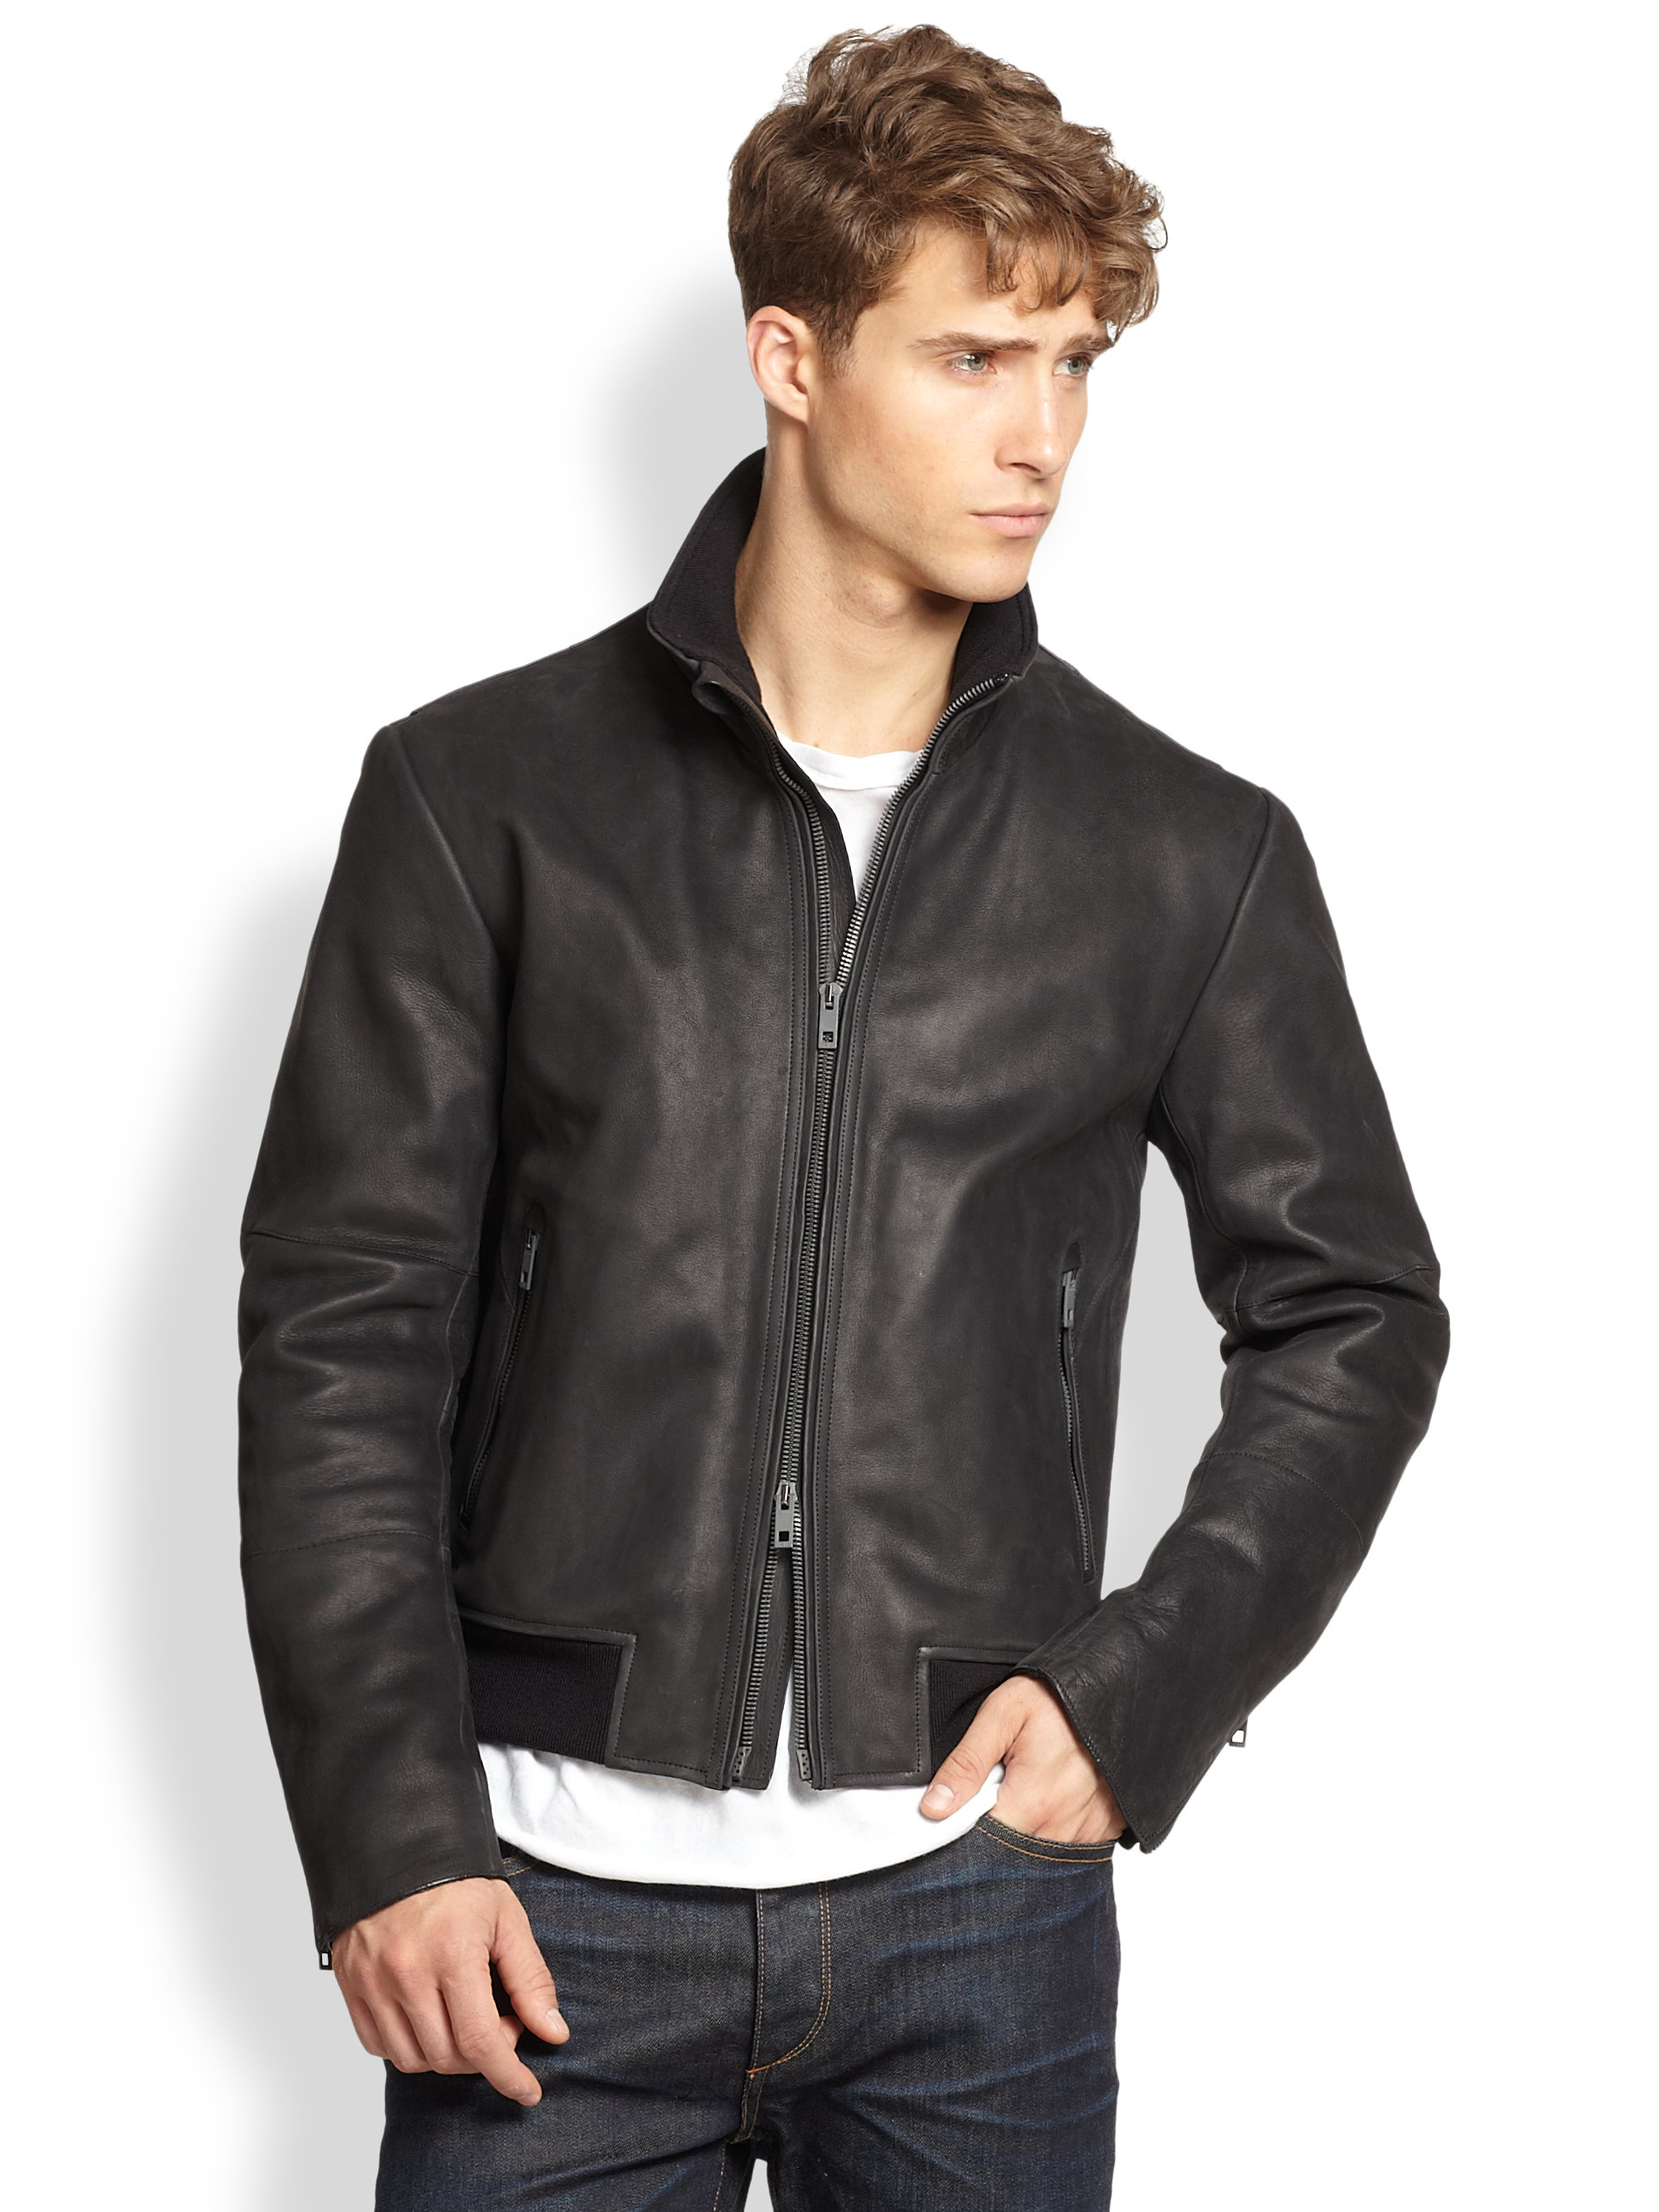 Rag & Bone Seth Leather Jacket in Black for Men - Lyst